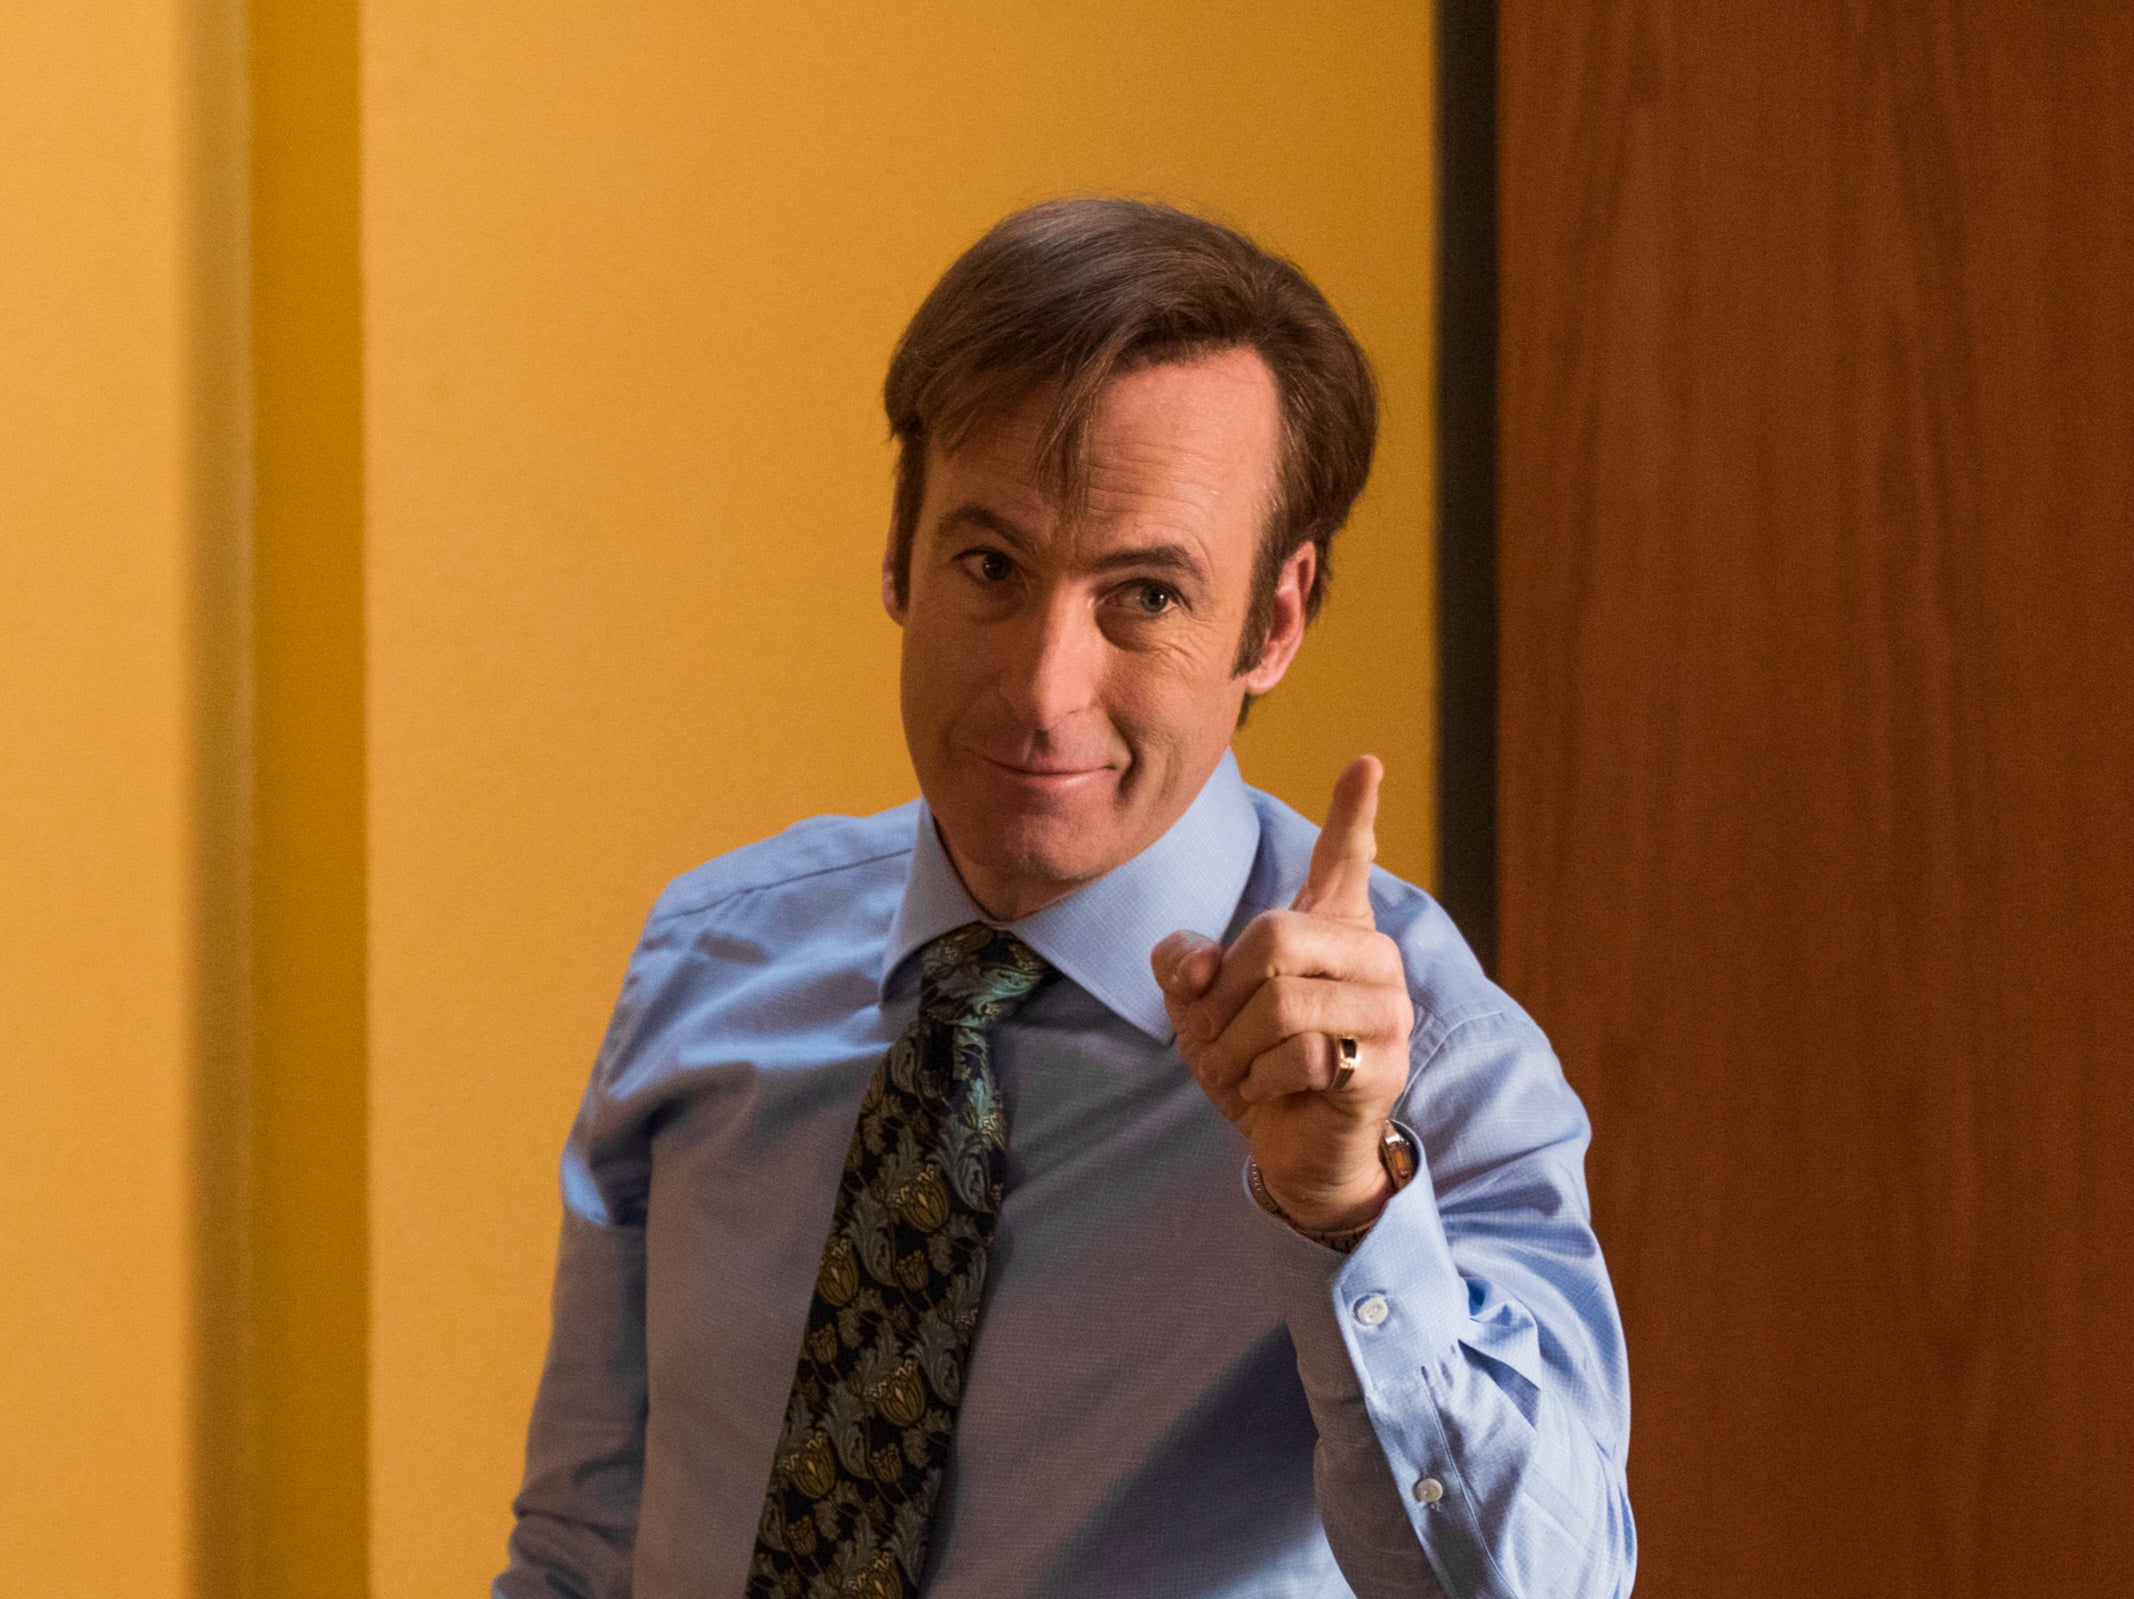 Better Call Saul star says season six will make viewers see